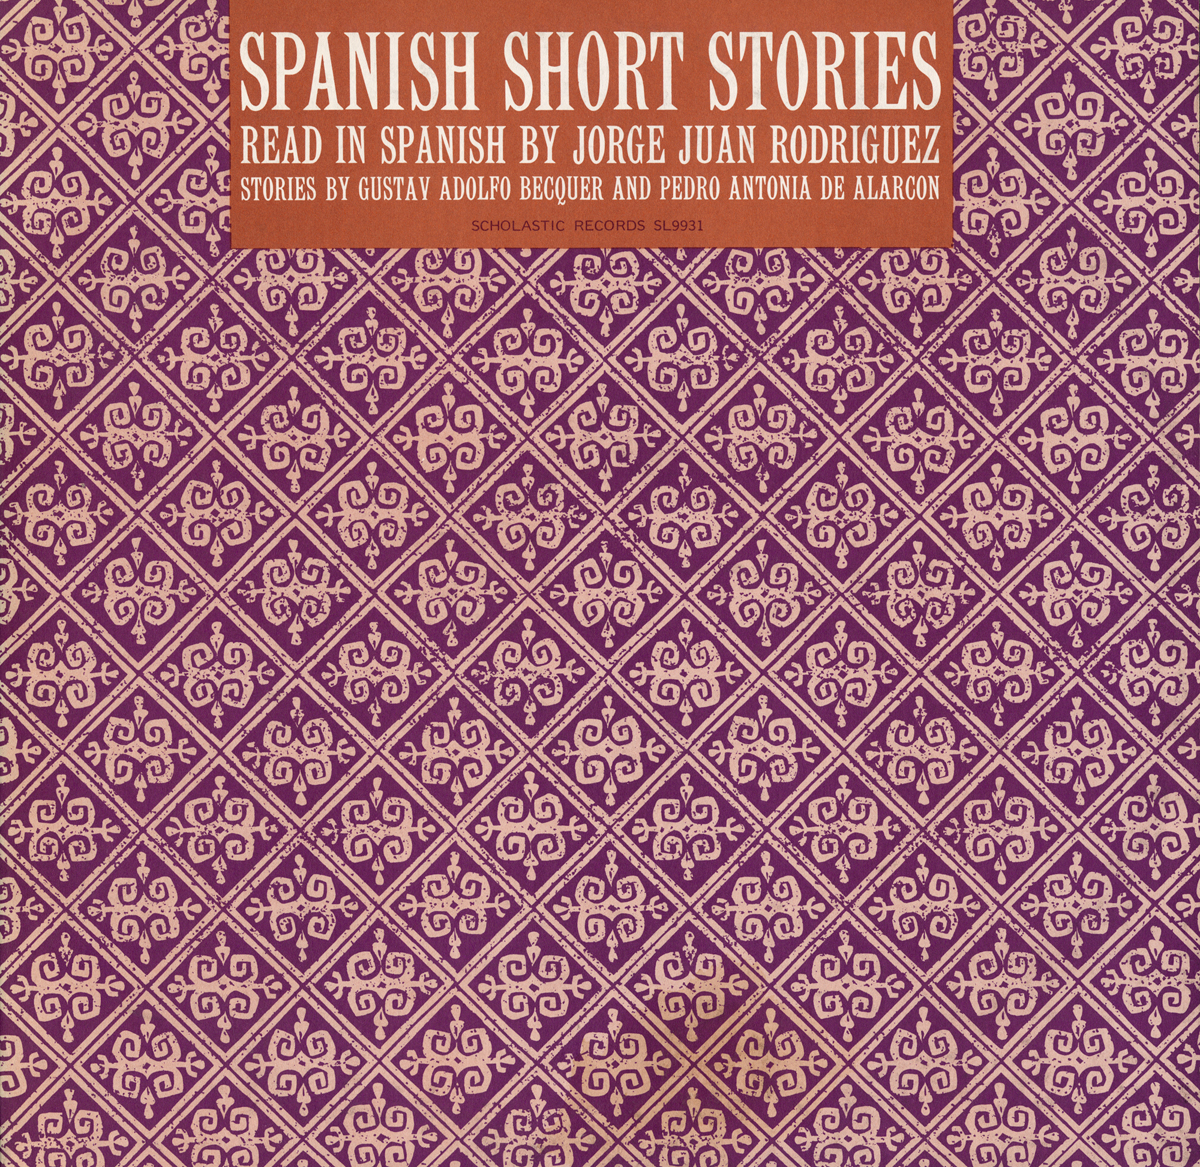 SPANISH SHORT STORIES: READ IN SPANISH